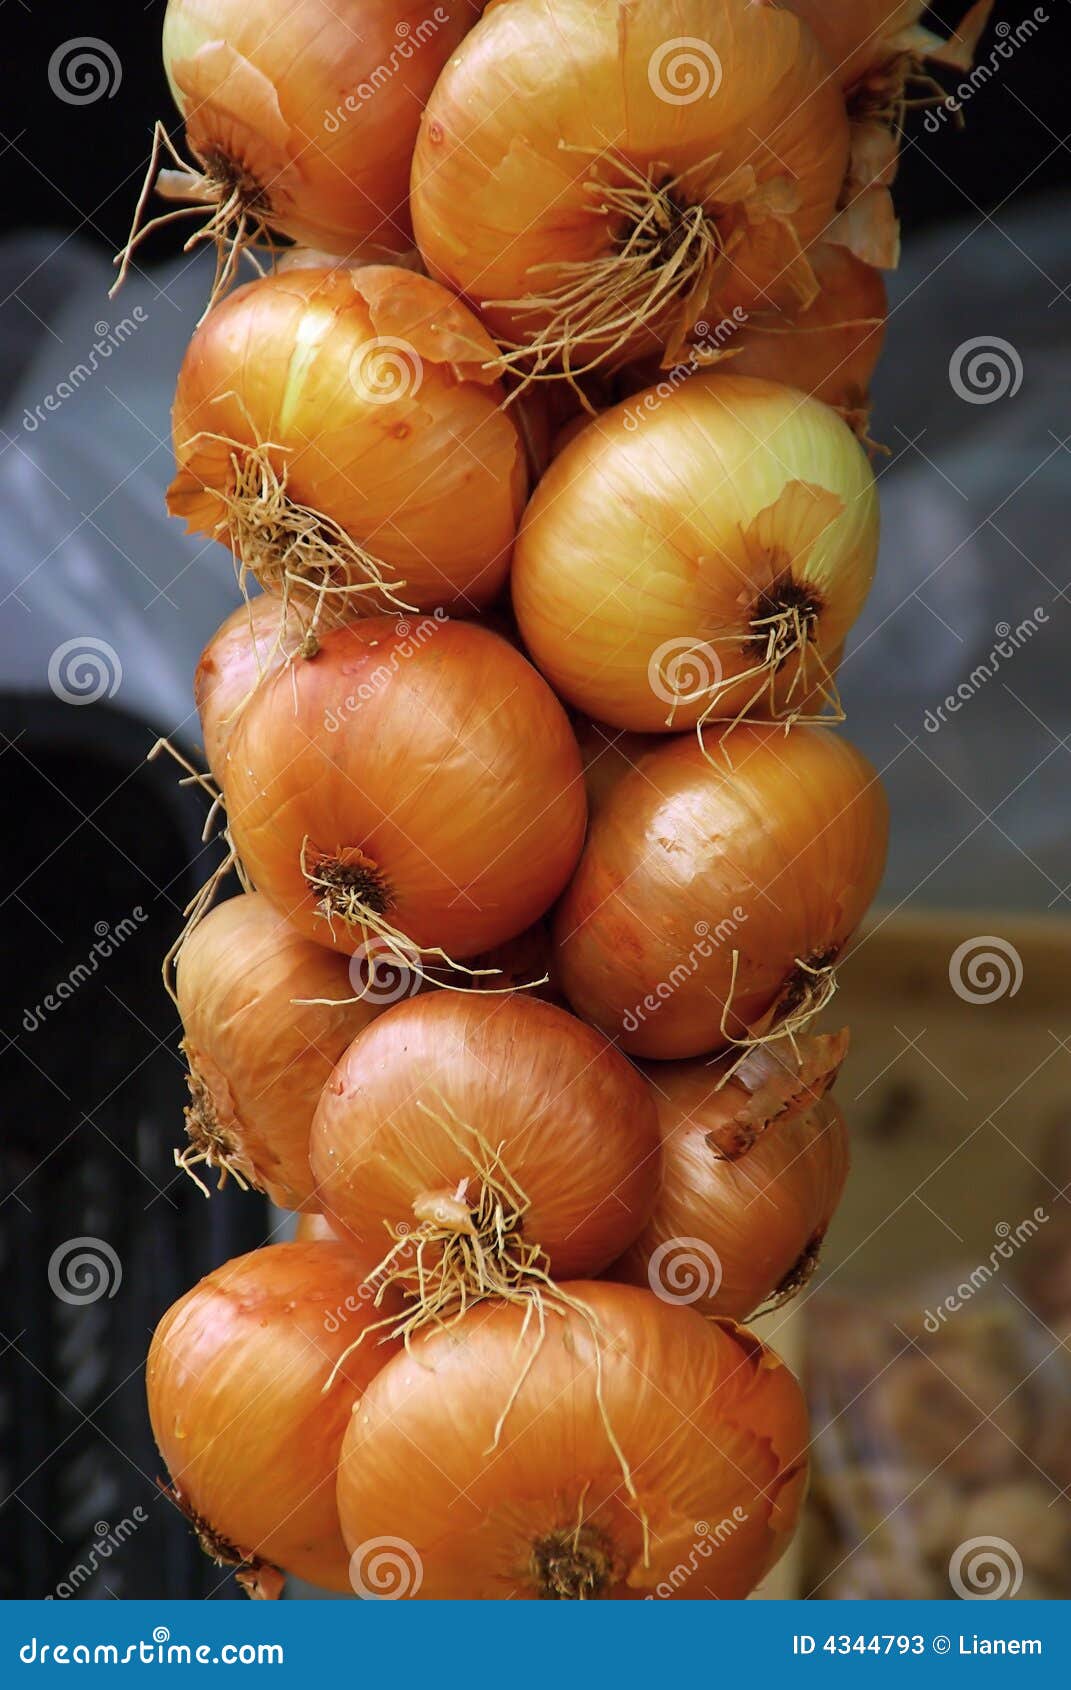 Onion Marketplace Drugs